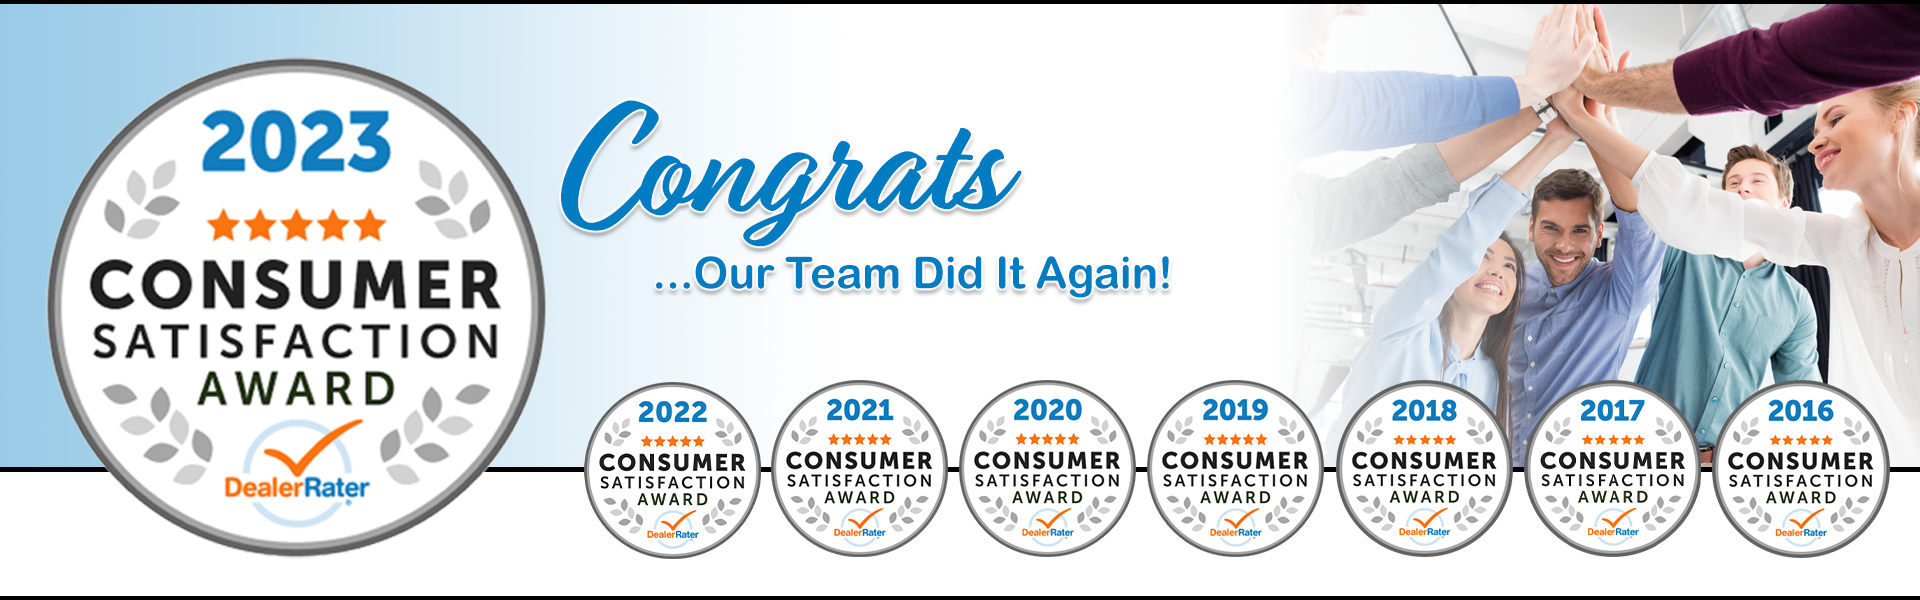 2023 Customer Satisfaction Award, Congrats To Our Team!